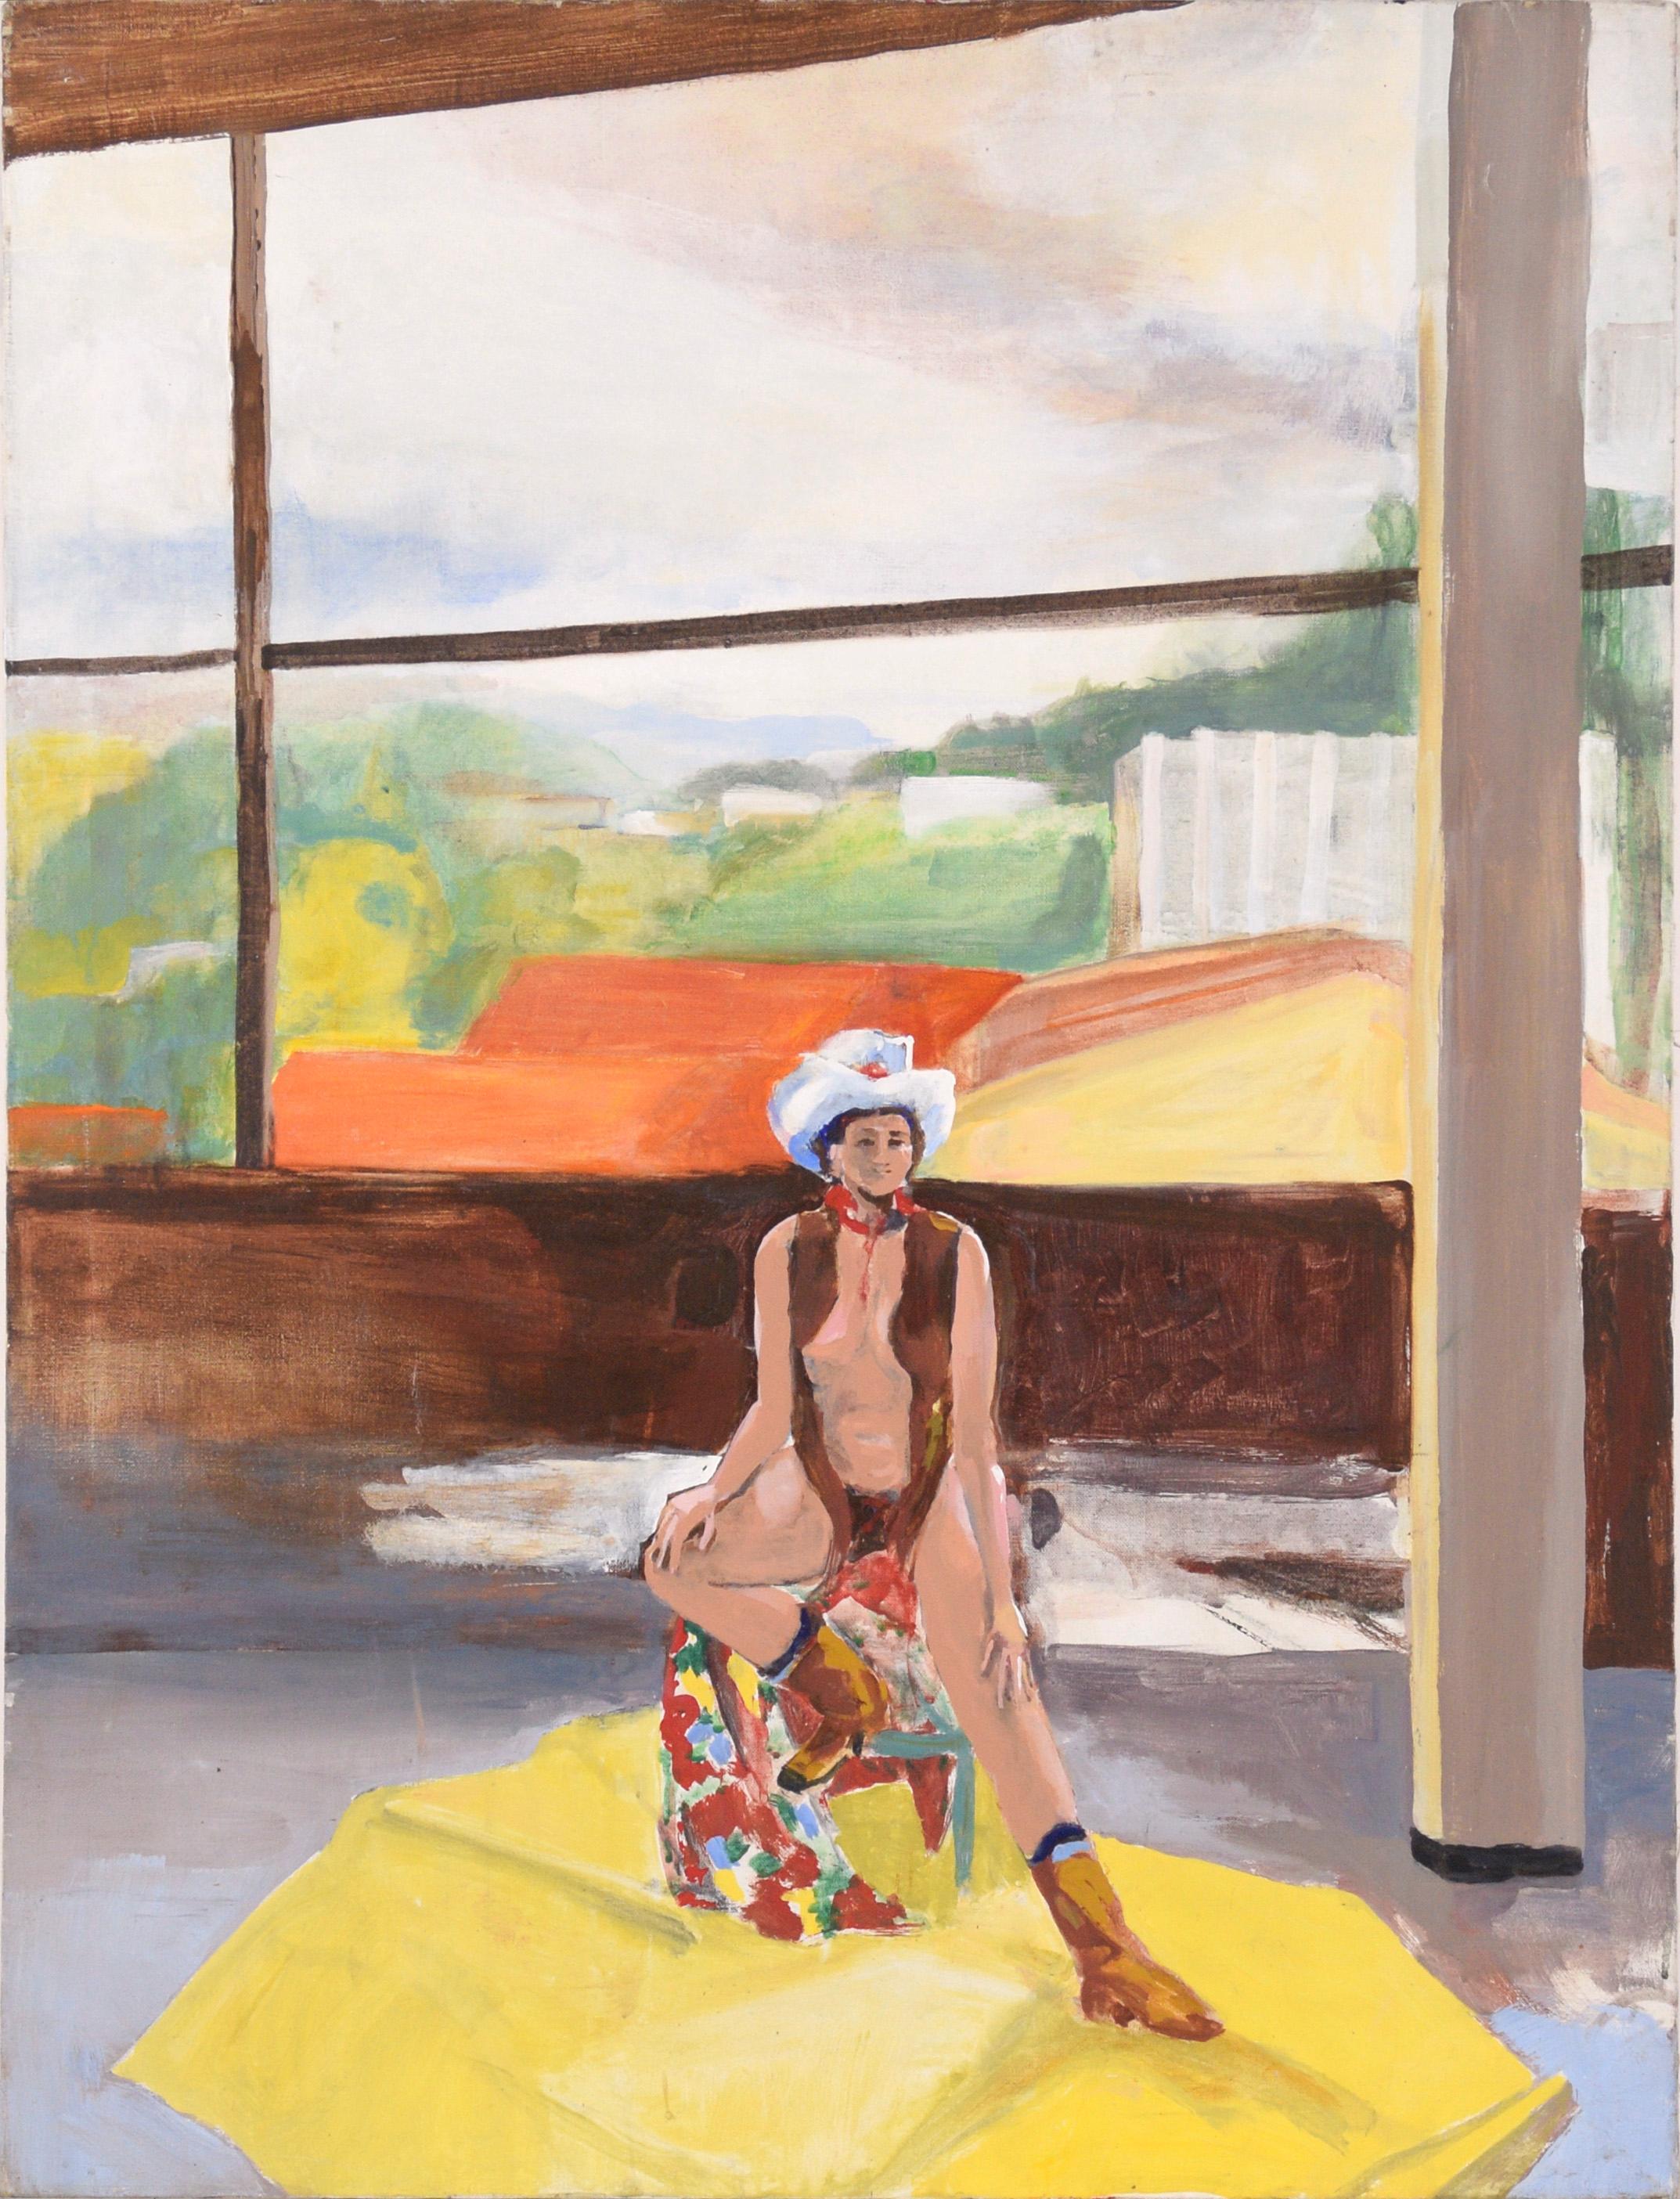 Figurative Painting Patricia Gren Hayes - Cowgirl in the Studio - Étude figurative à l'huile sur toile